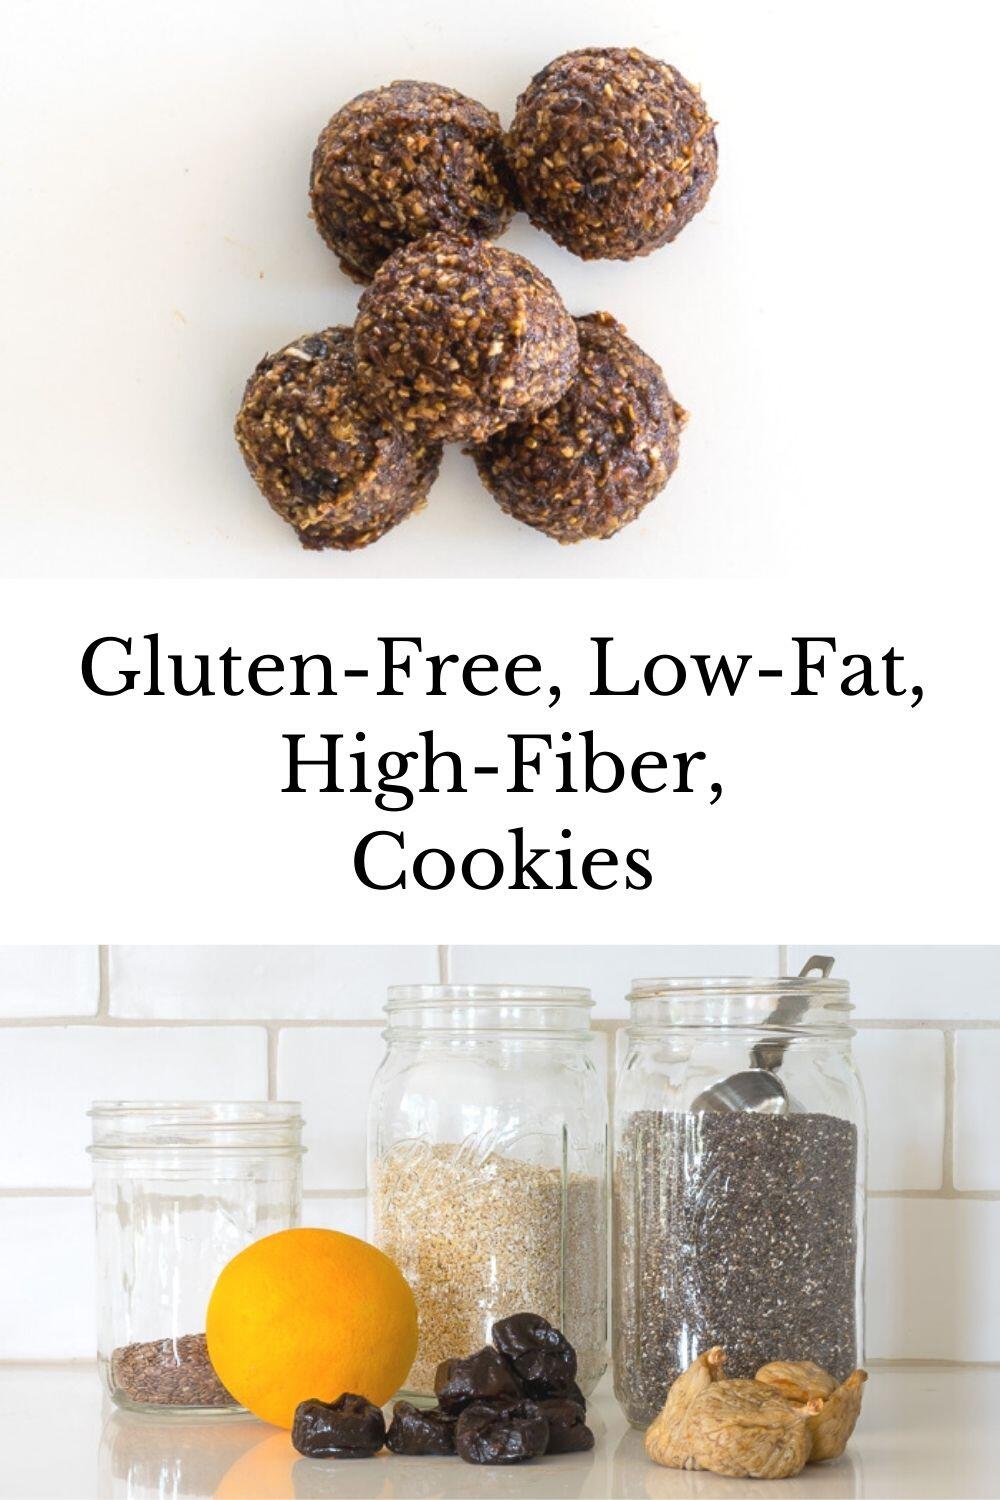 High Fiber Cookies Recipe: low-fat & gluten-free - Nourish ...